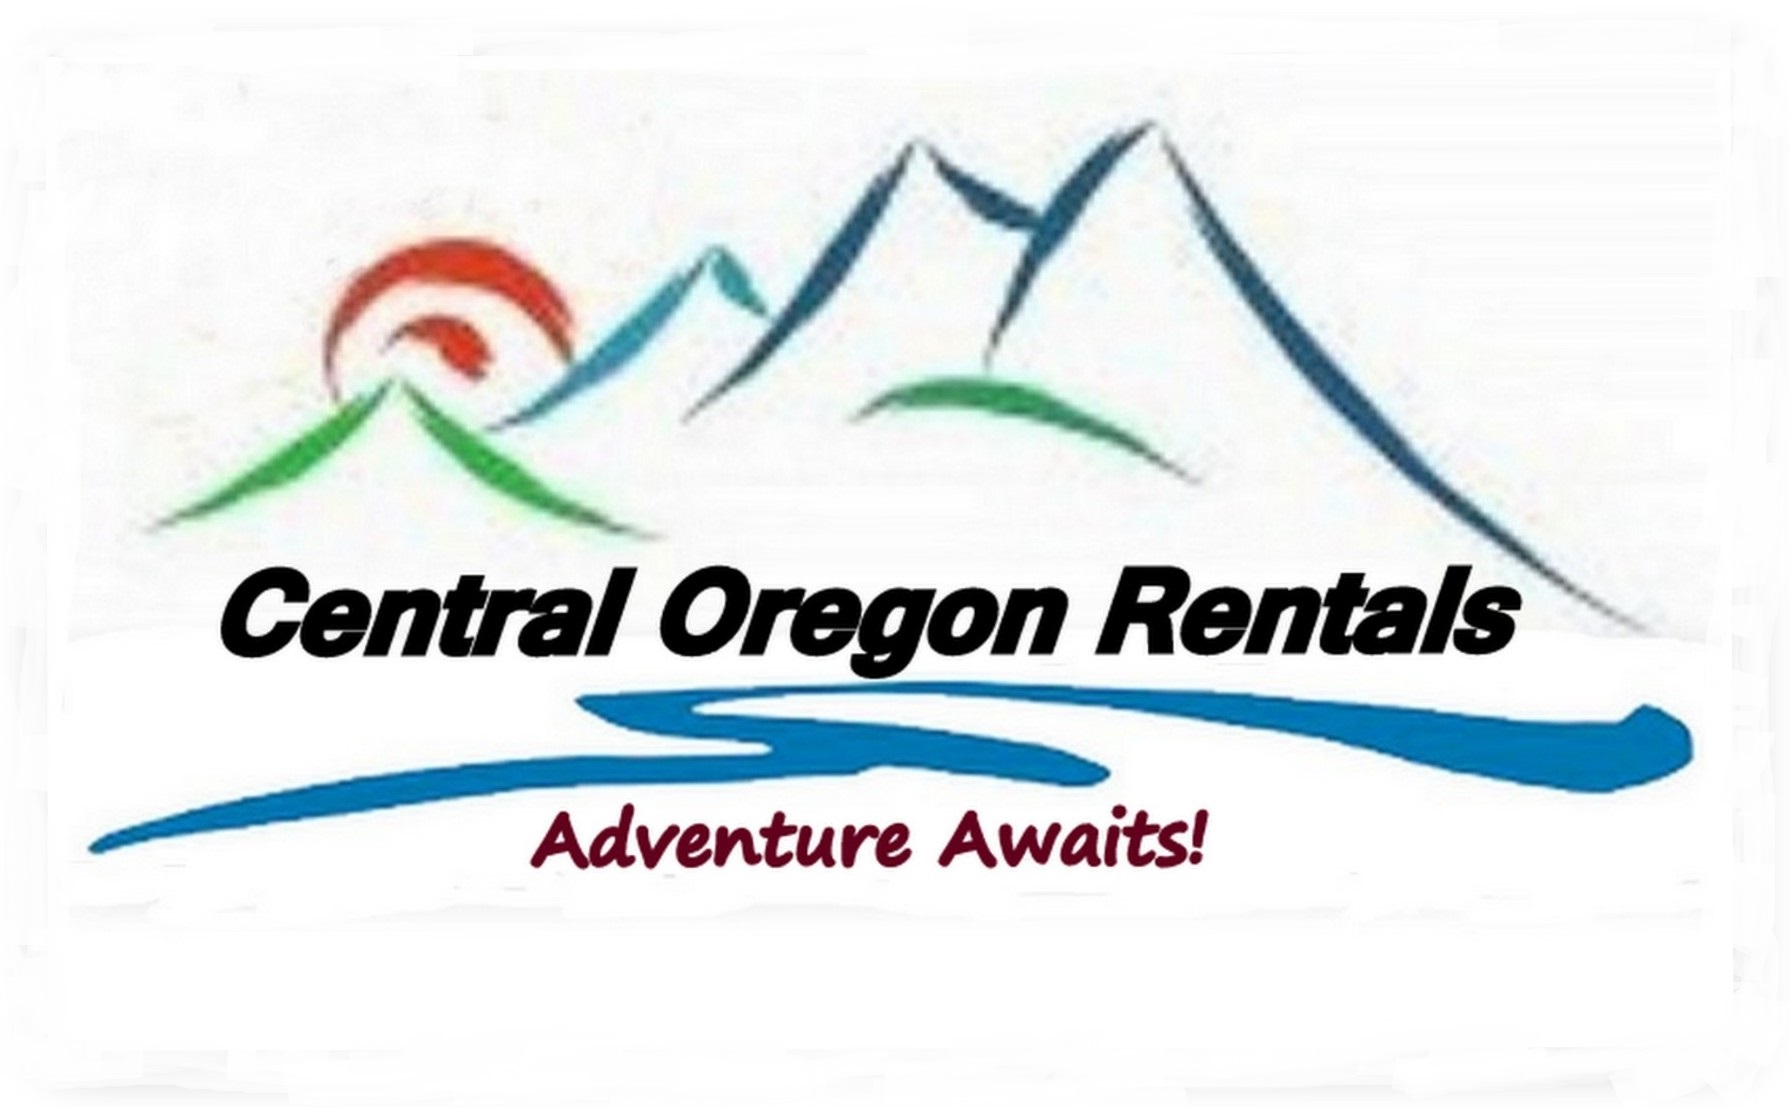 Central Oregon Rentals logo.jpg